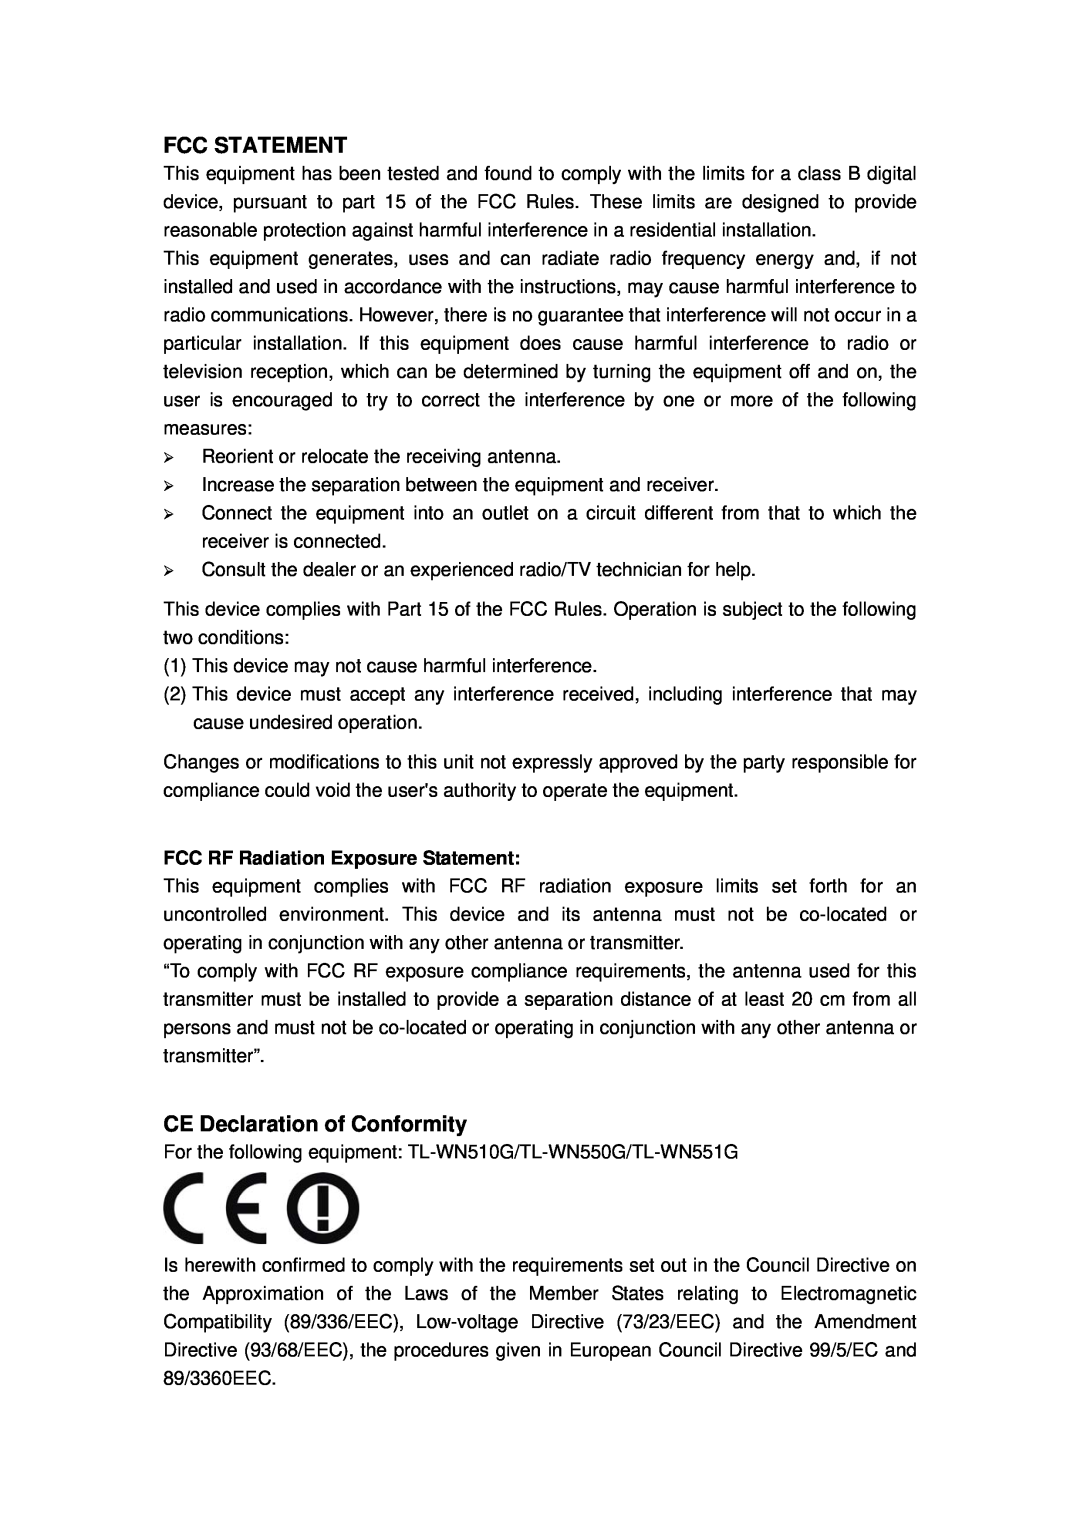 TP-Link TL-WN510G, TL-WN551G, TL-WN550G Fcc Statement, CE Declaration of Conformity, FCC RF Radiation Exposure Statement 